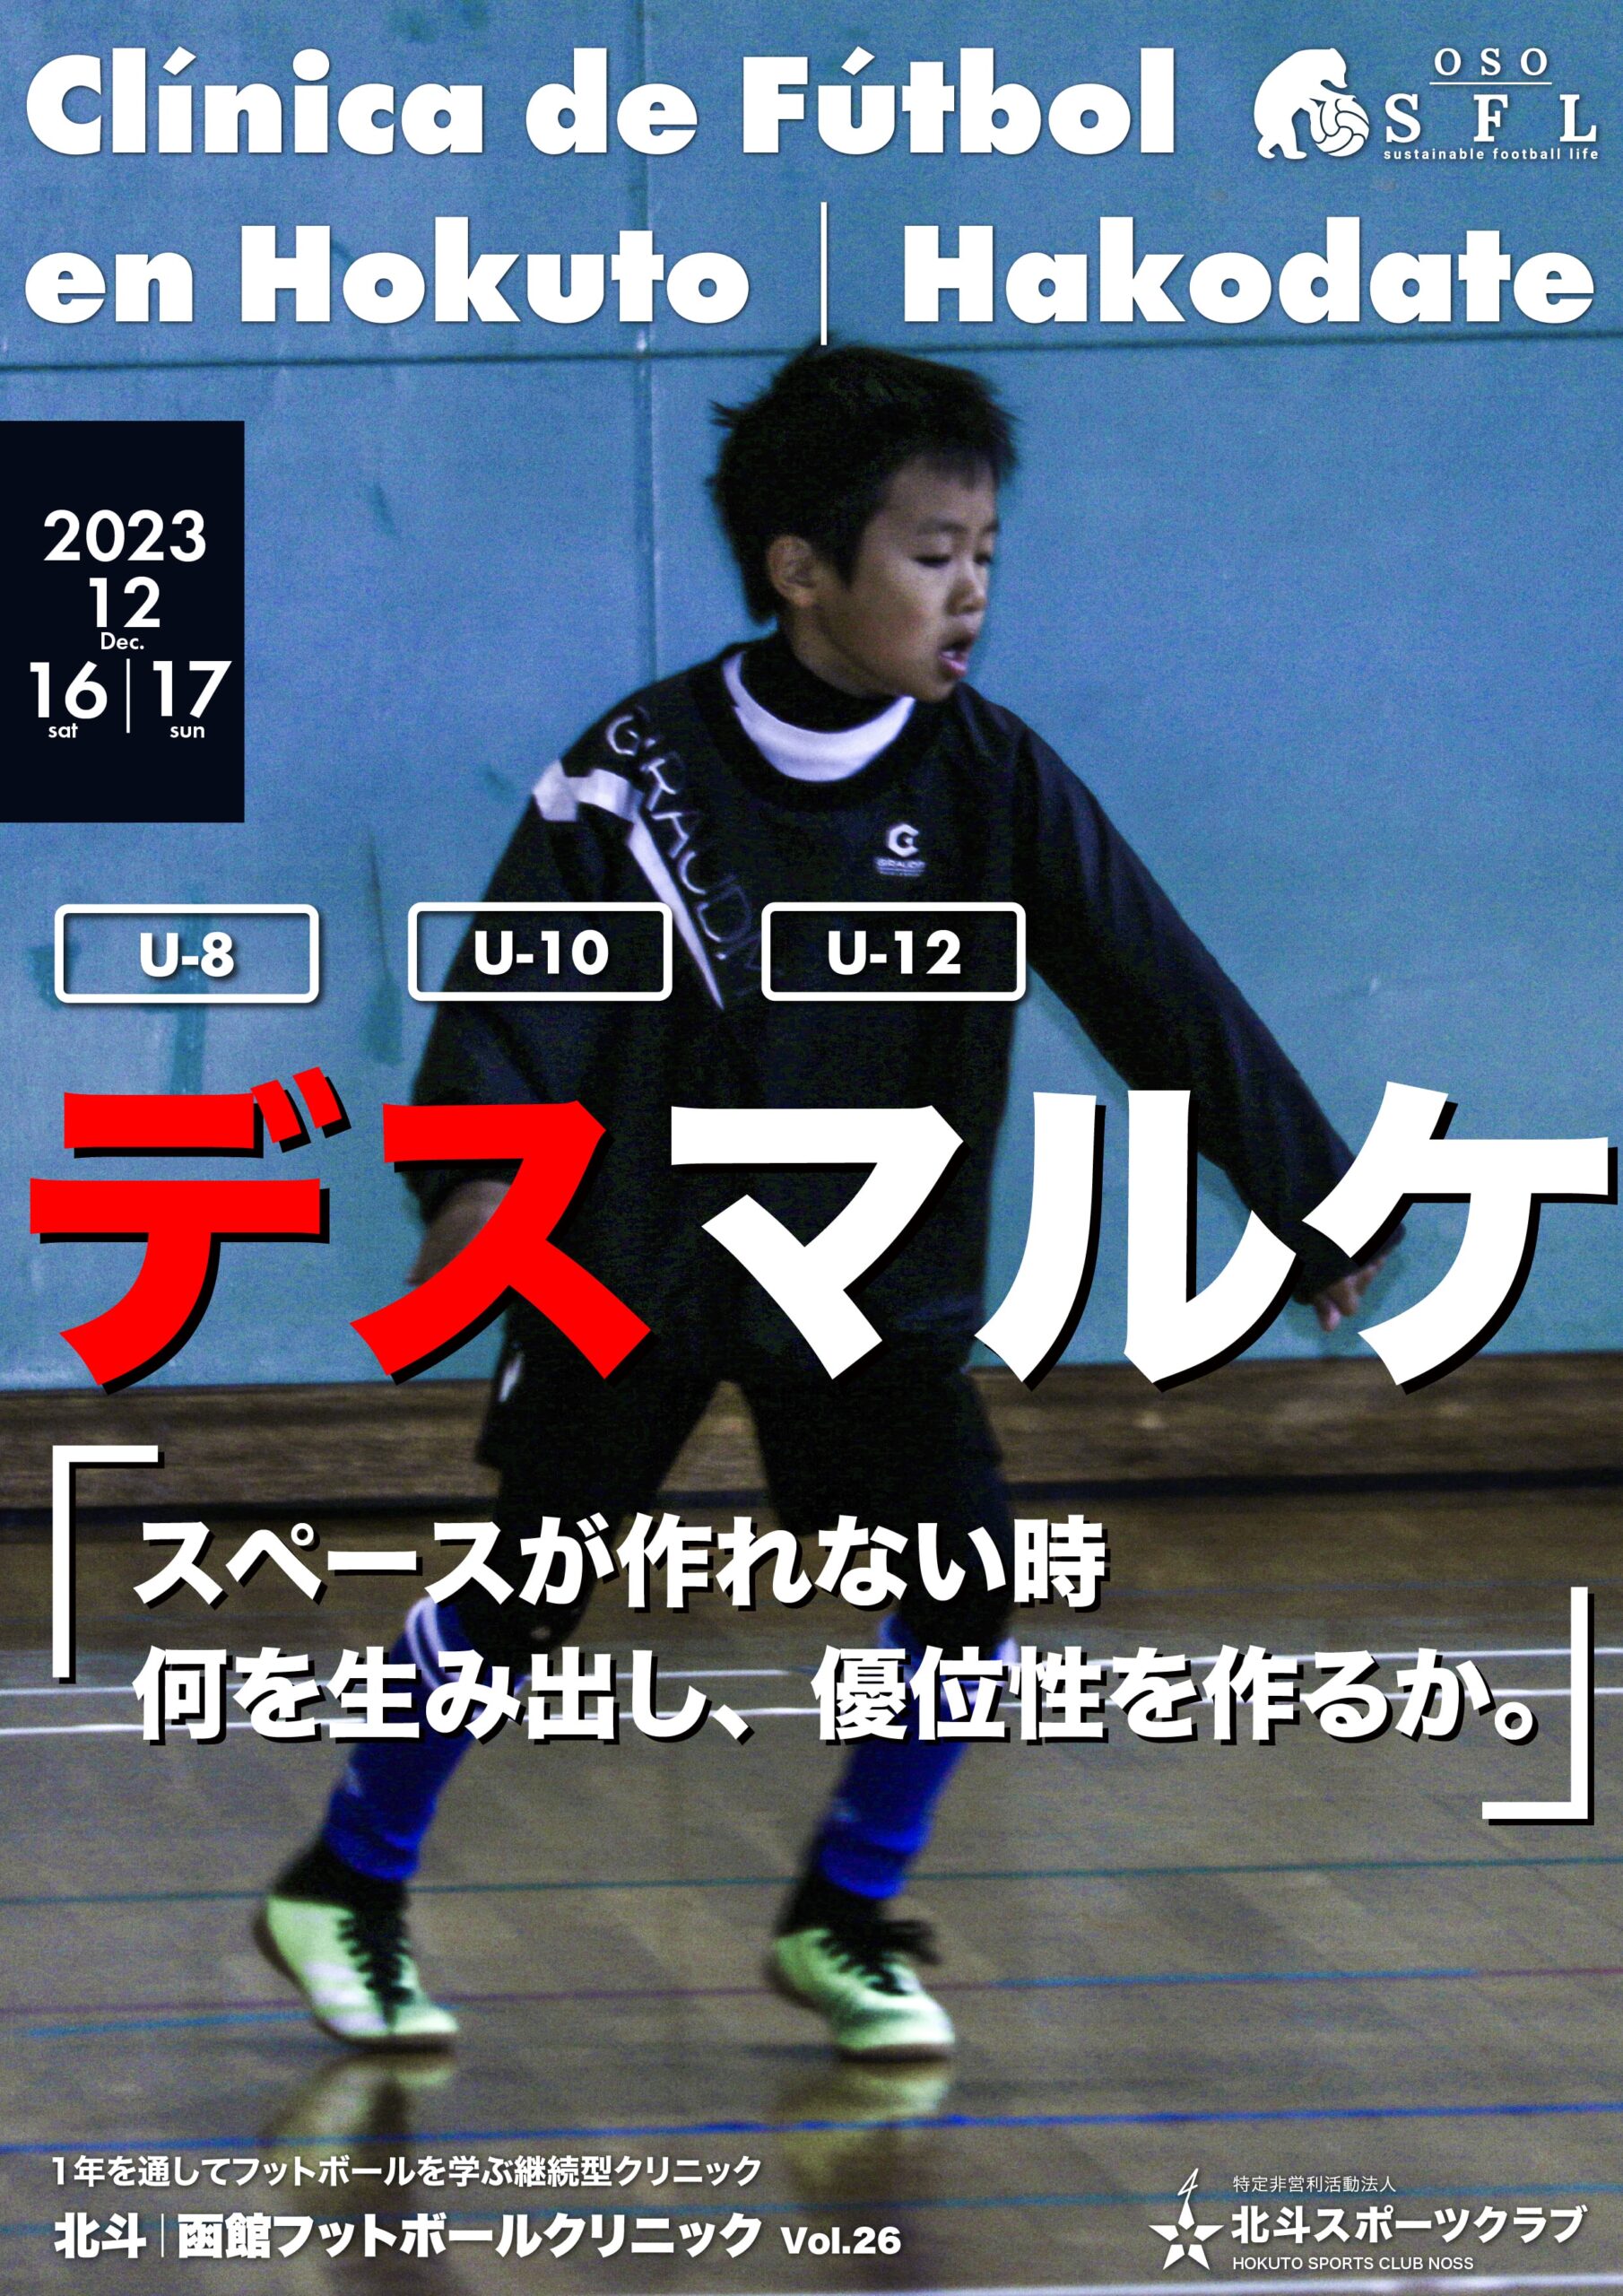 20231114_notice-hokuto-hakodate-football-clinic-2023-vol26_A4-02-min